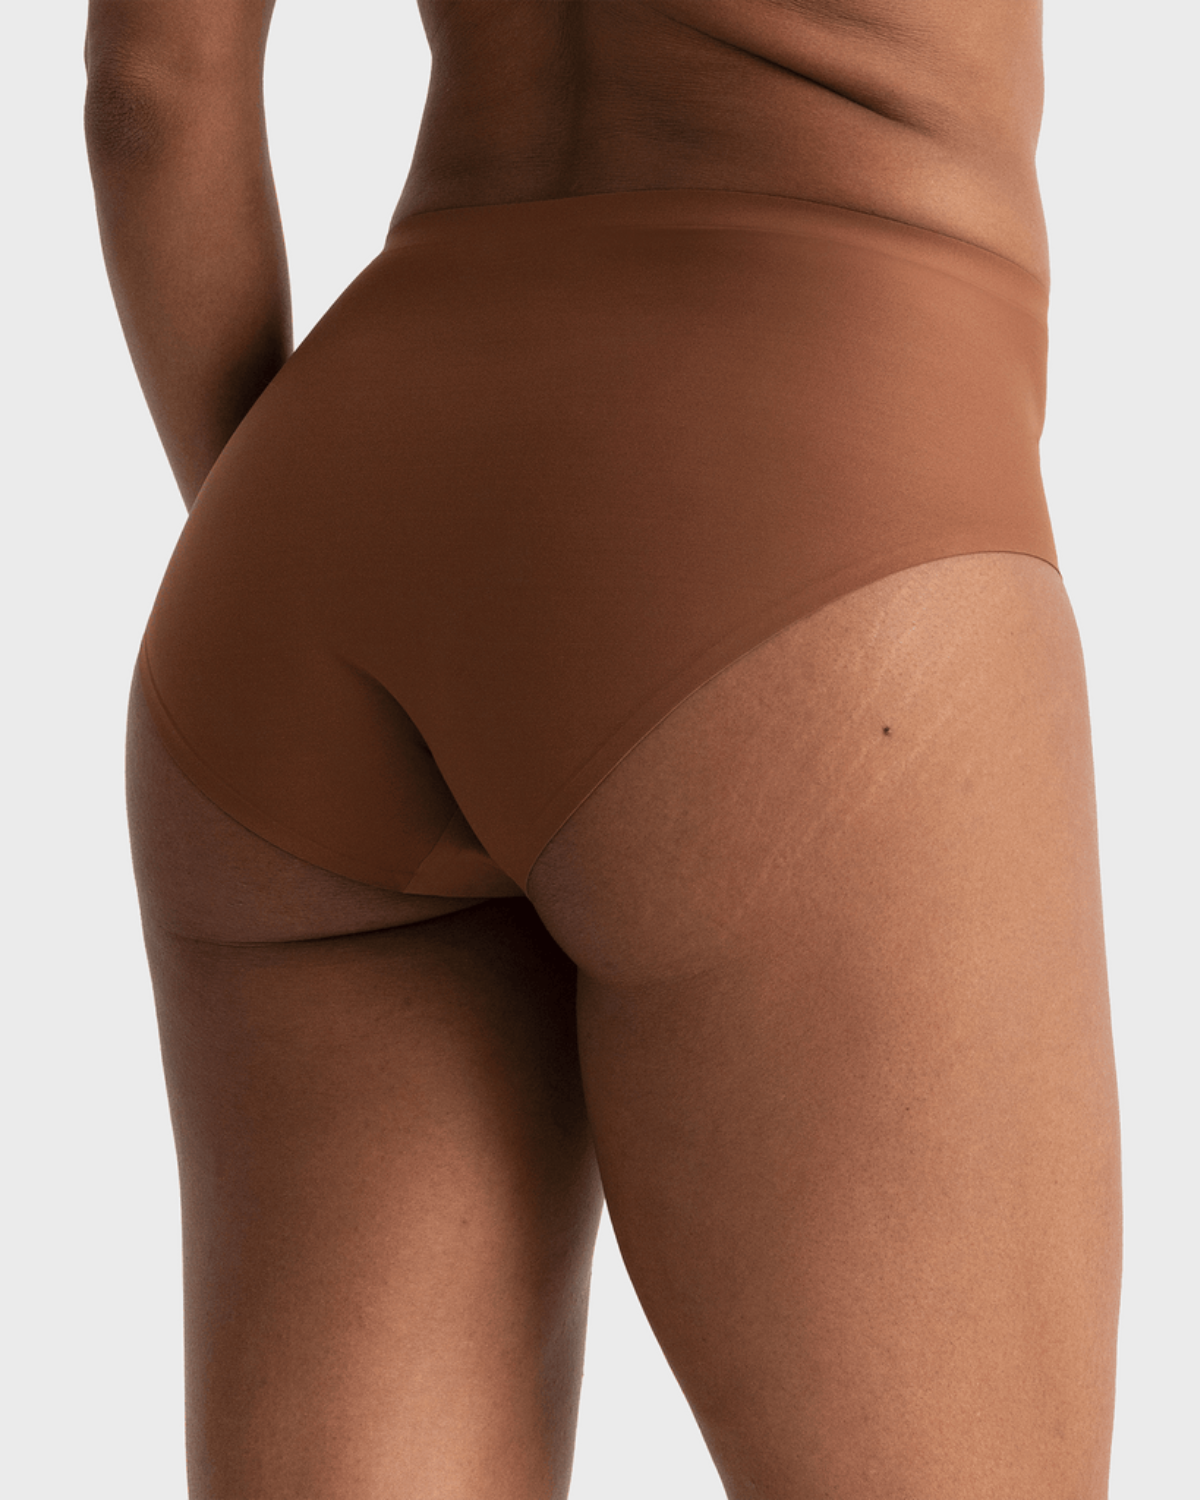 Model wearing a dark nude high waist seamless brief panty